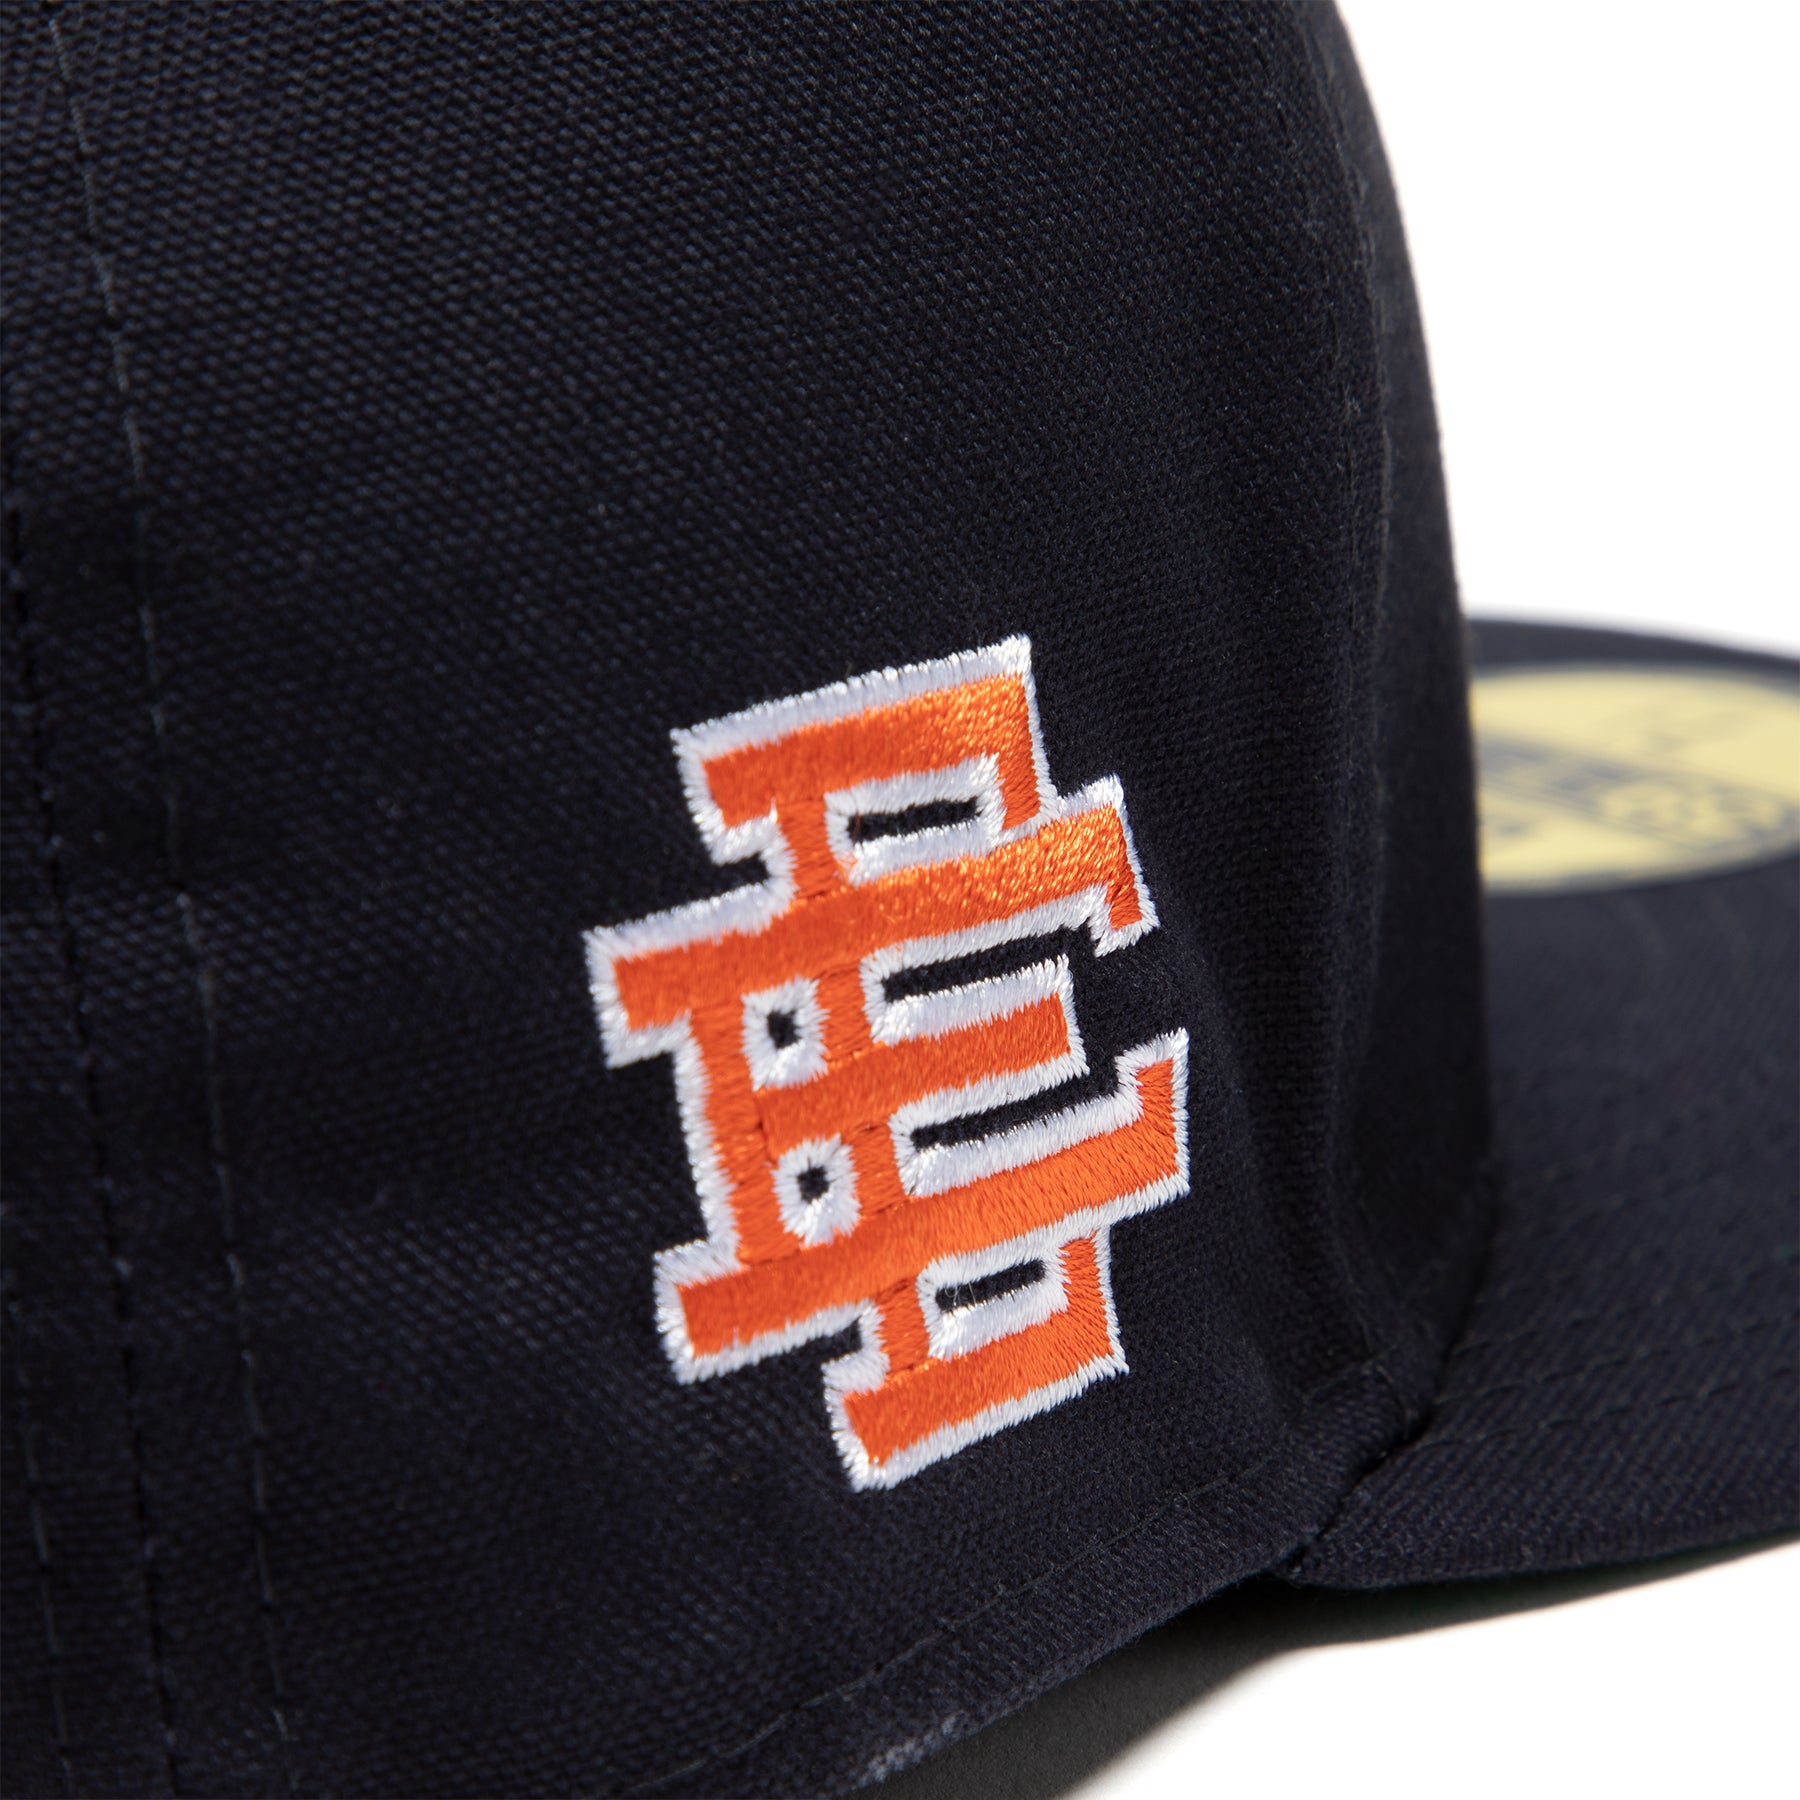 Houston Astros SPANKY Plaid-Navy Denim Fitted Hat by New Era